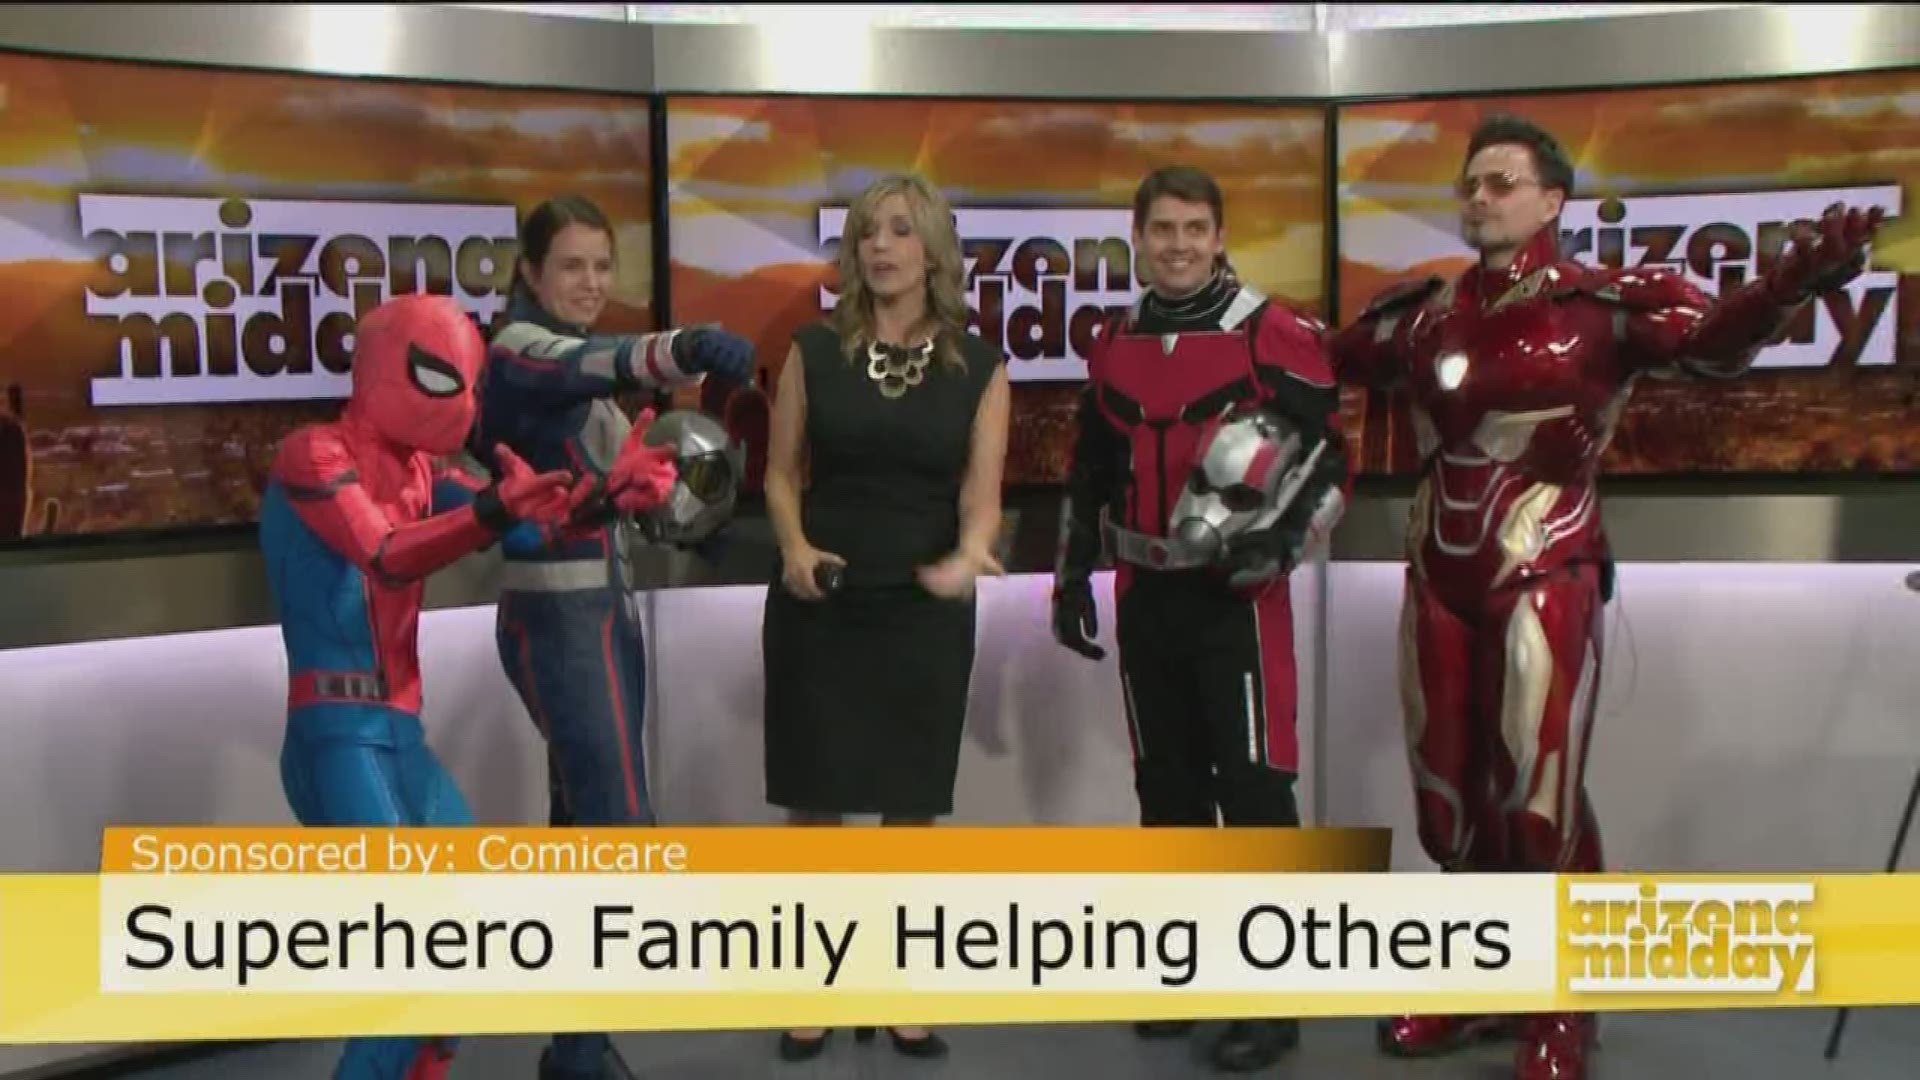 Community superheroes Andrew Gordan and Tony Contreras explain how they help kids through Comicare.